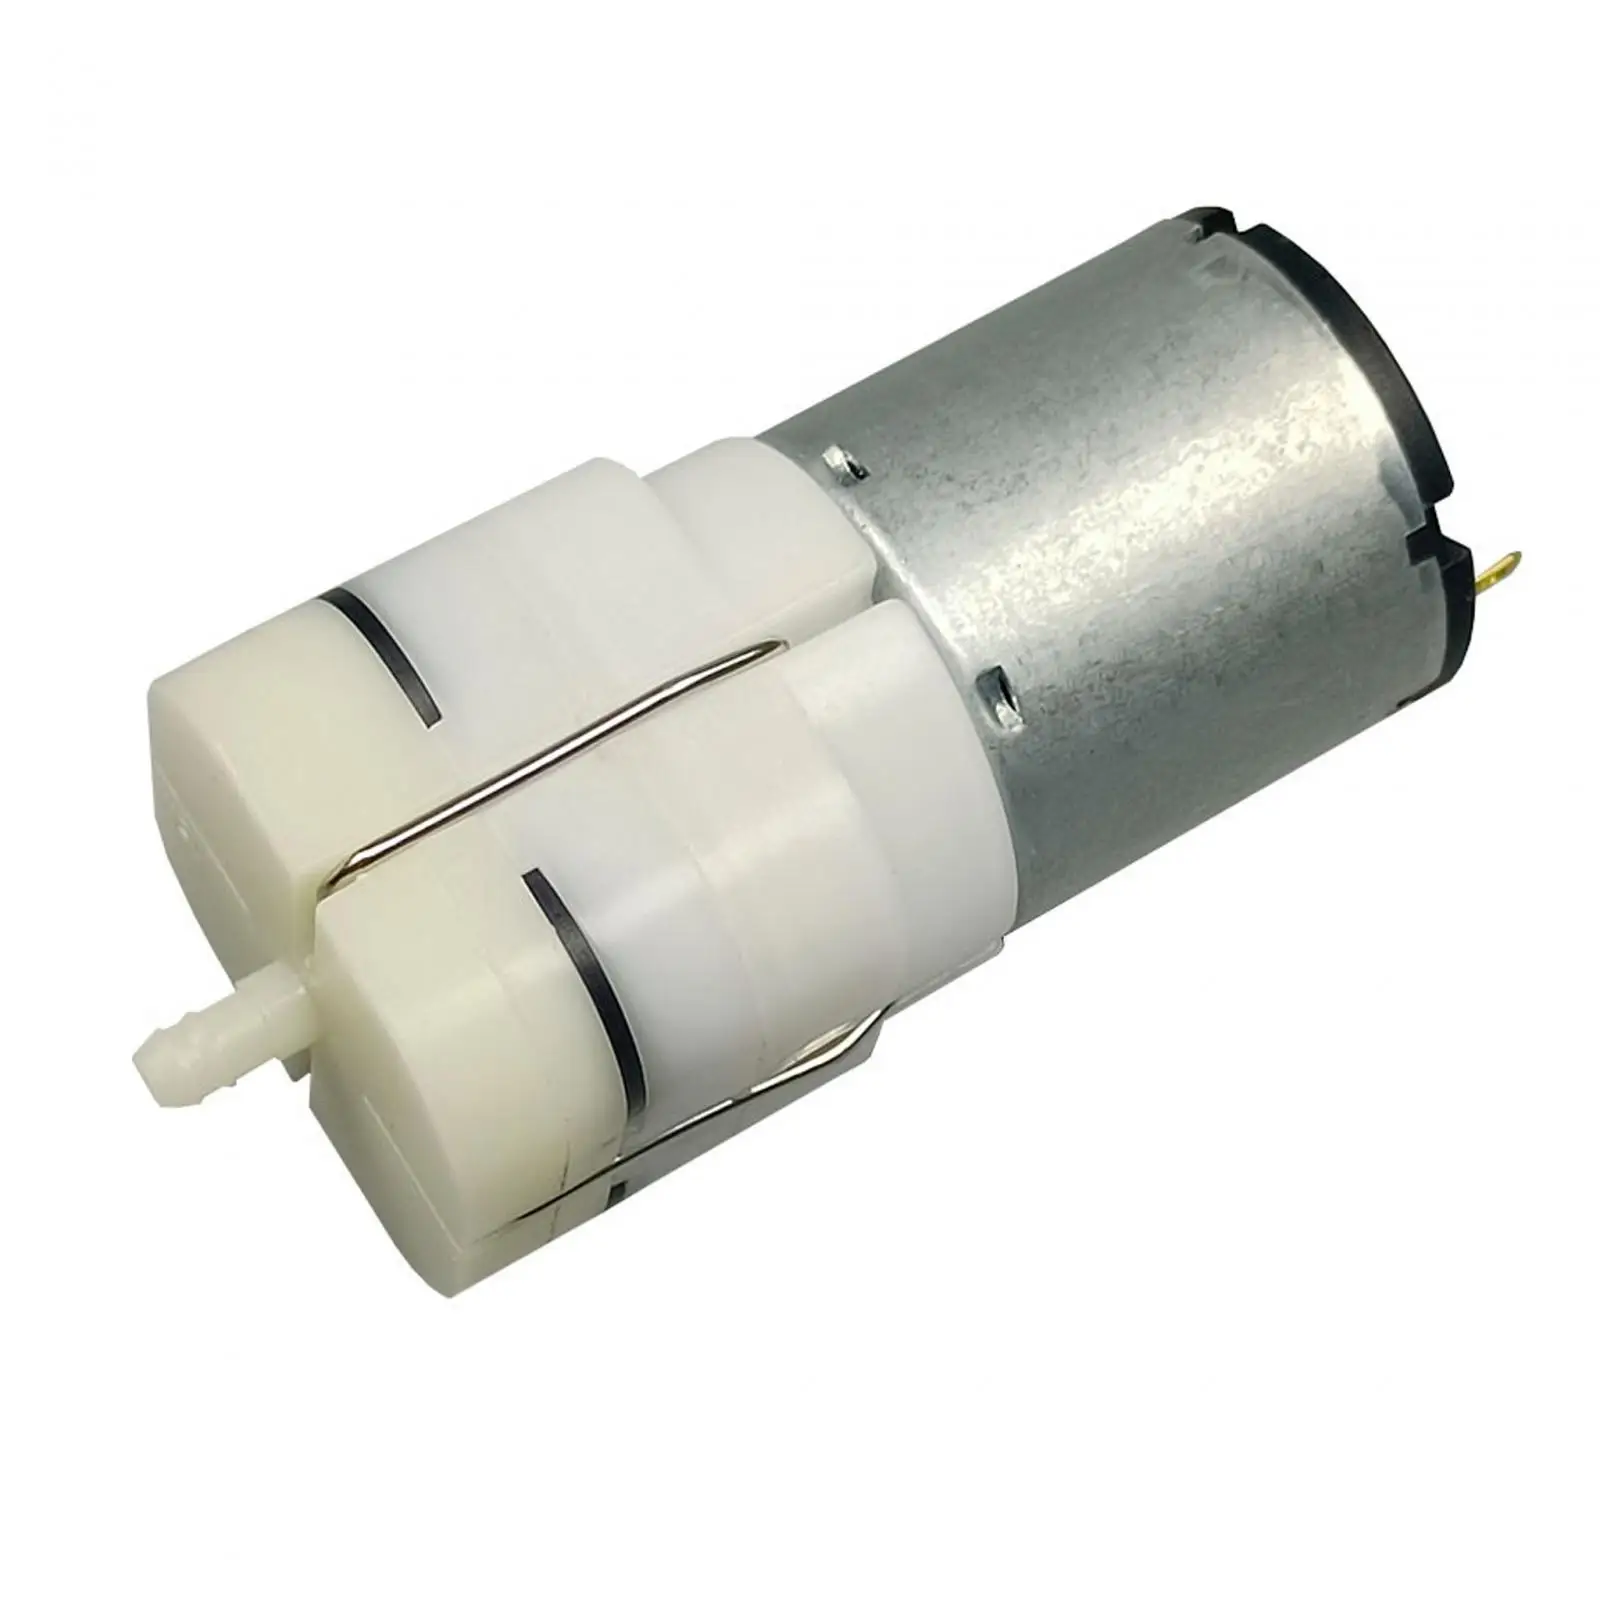 Aquarium Air Pump Powerful Compact Size Energy Saving Gadget Easy to Use Aerator Pump Pump for Fish Tanks Power Cut